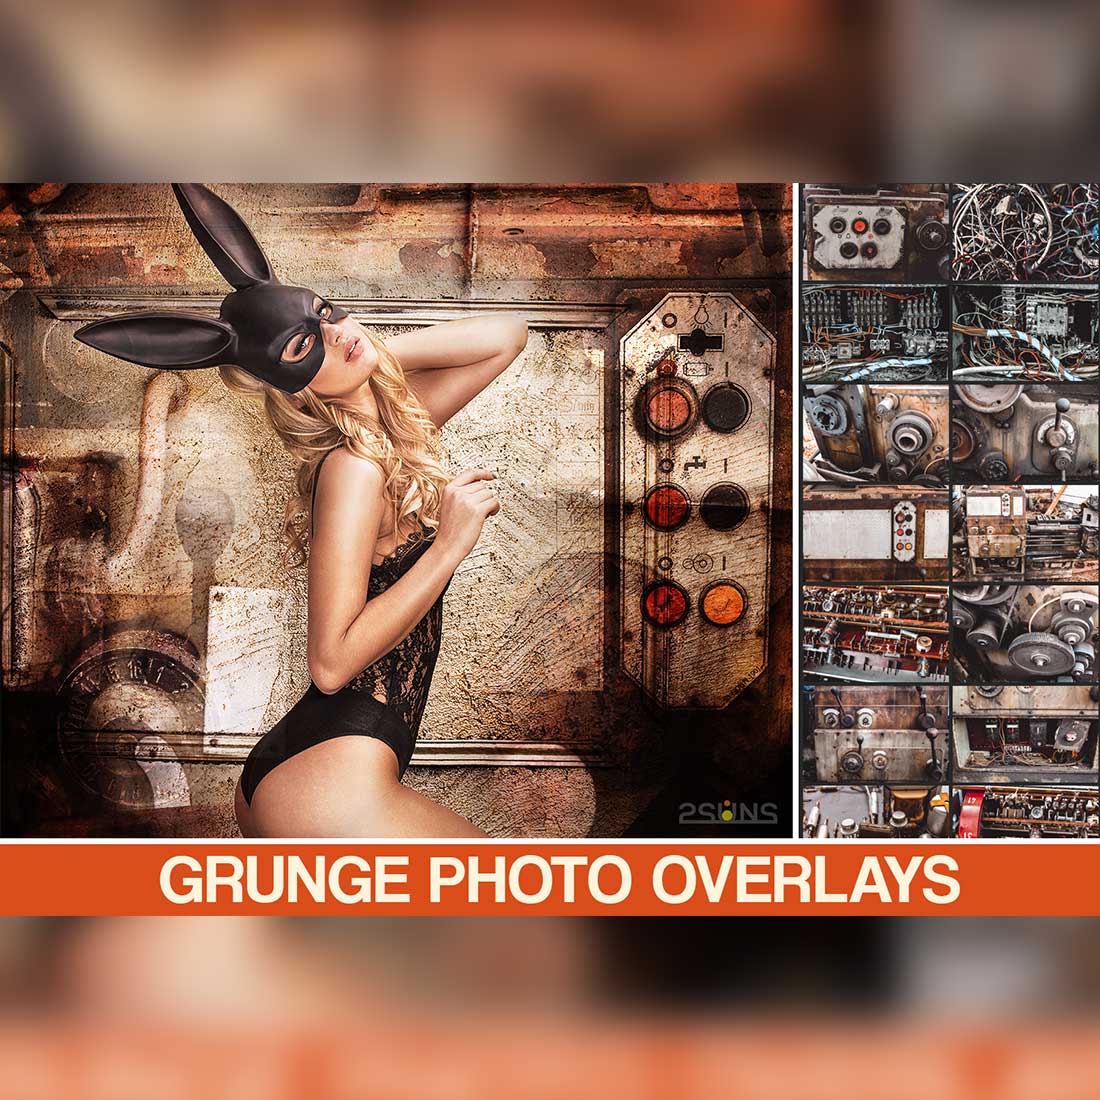 Halloween Grunge Urban Photo Overlays Cover Image.